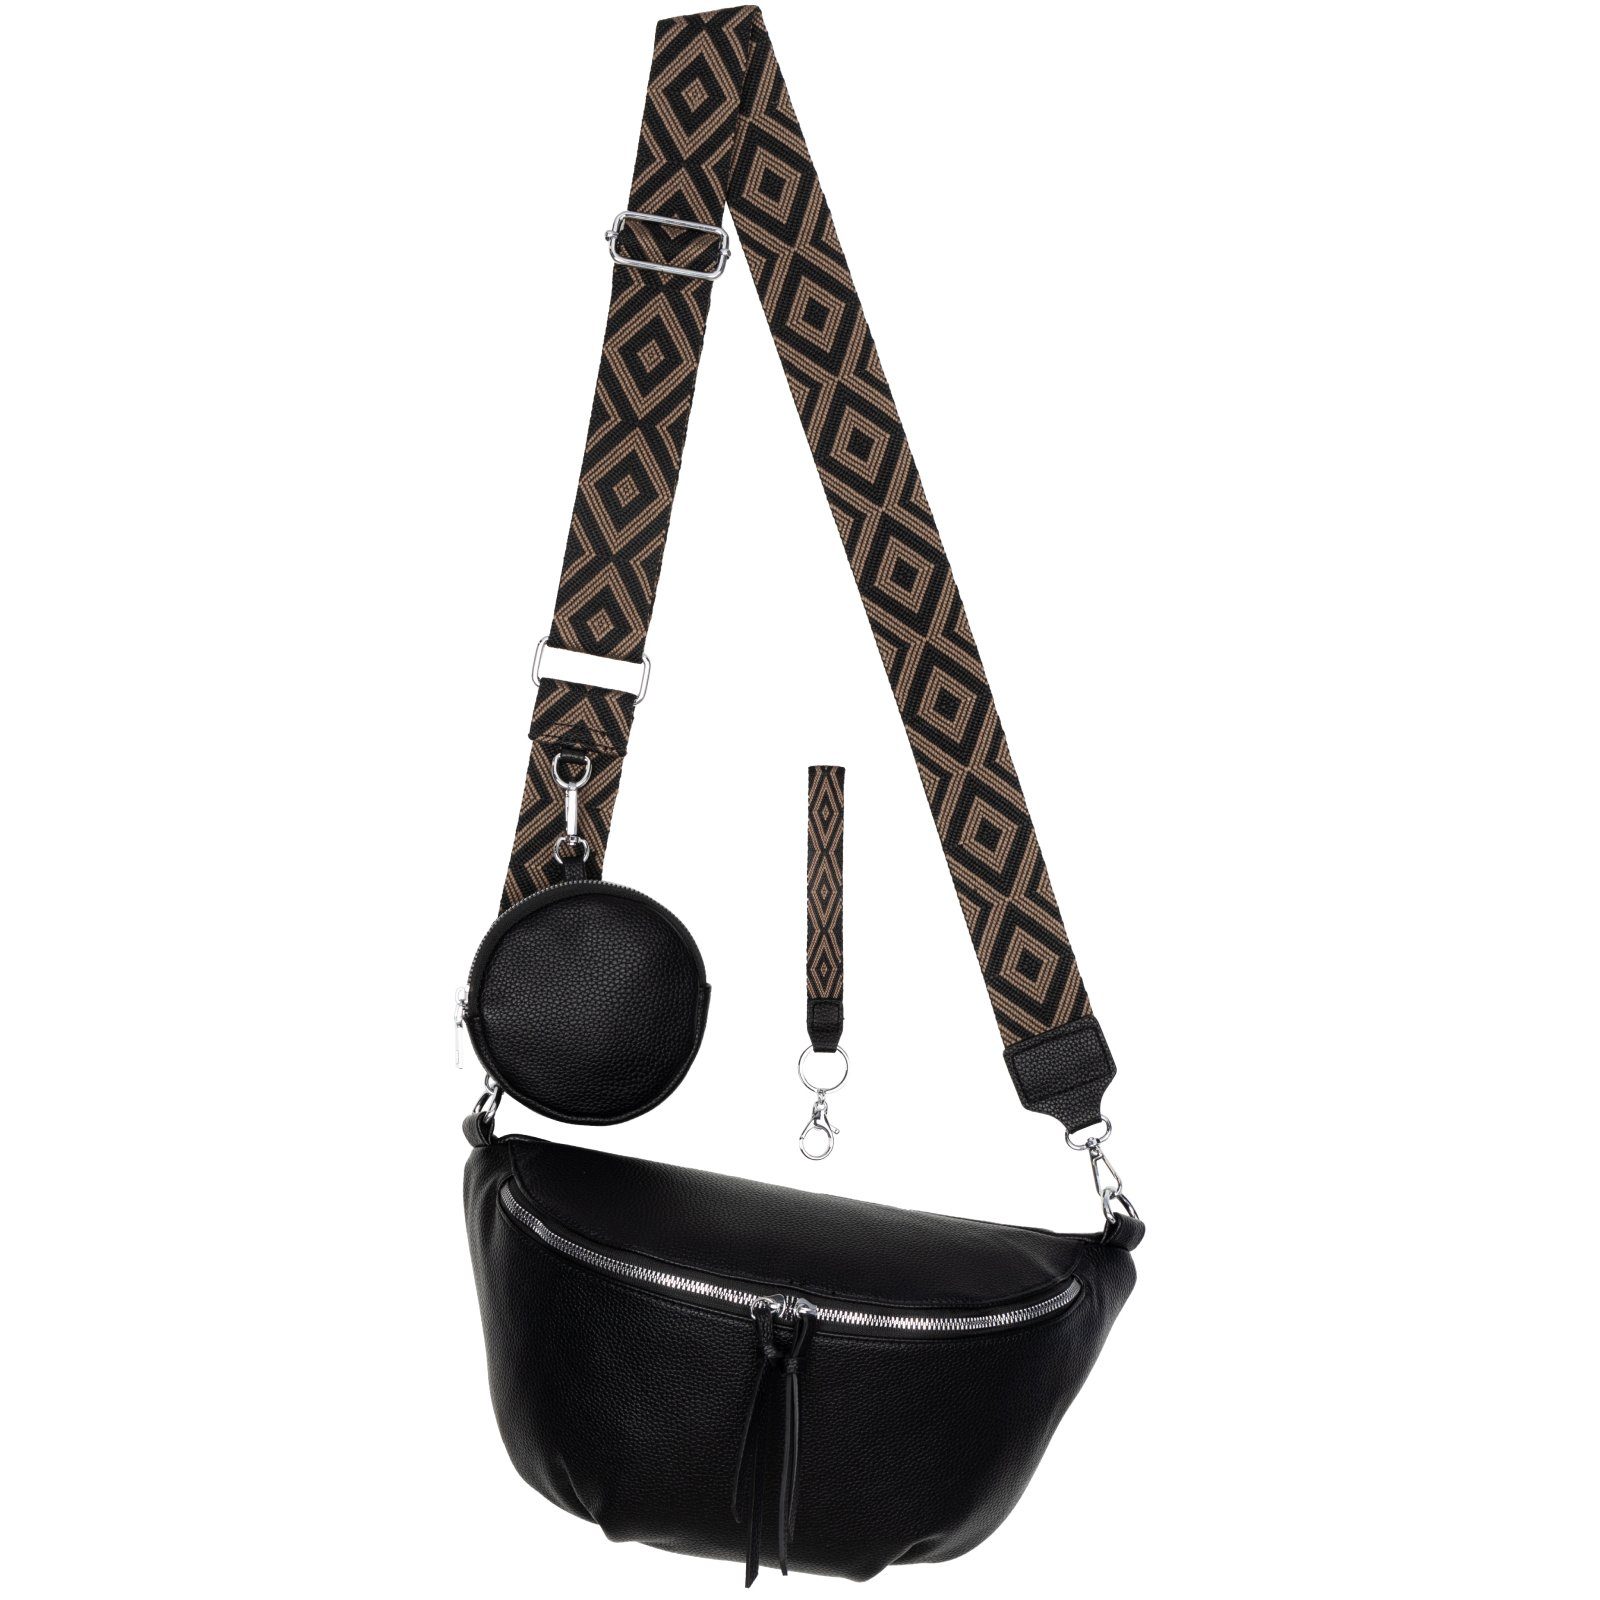 EAAKIE Gürteltasche Bauchtasche Umhängetasche Crossbody-Bag Hüfttasche Kunstleder Italy-D, als Schultertasche, CrossOver, Umhängetasche tragbar BLACK